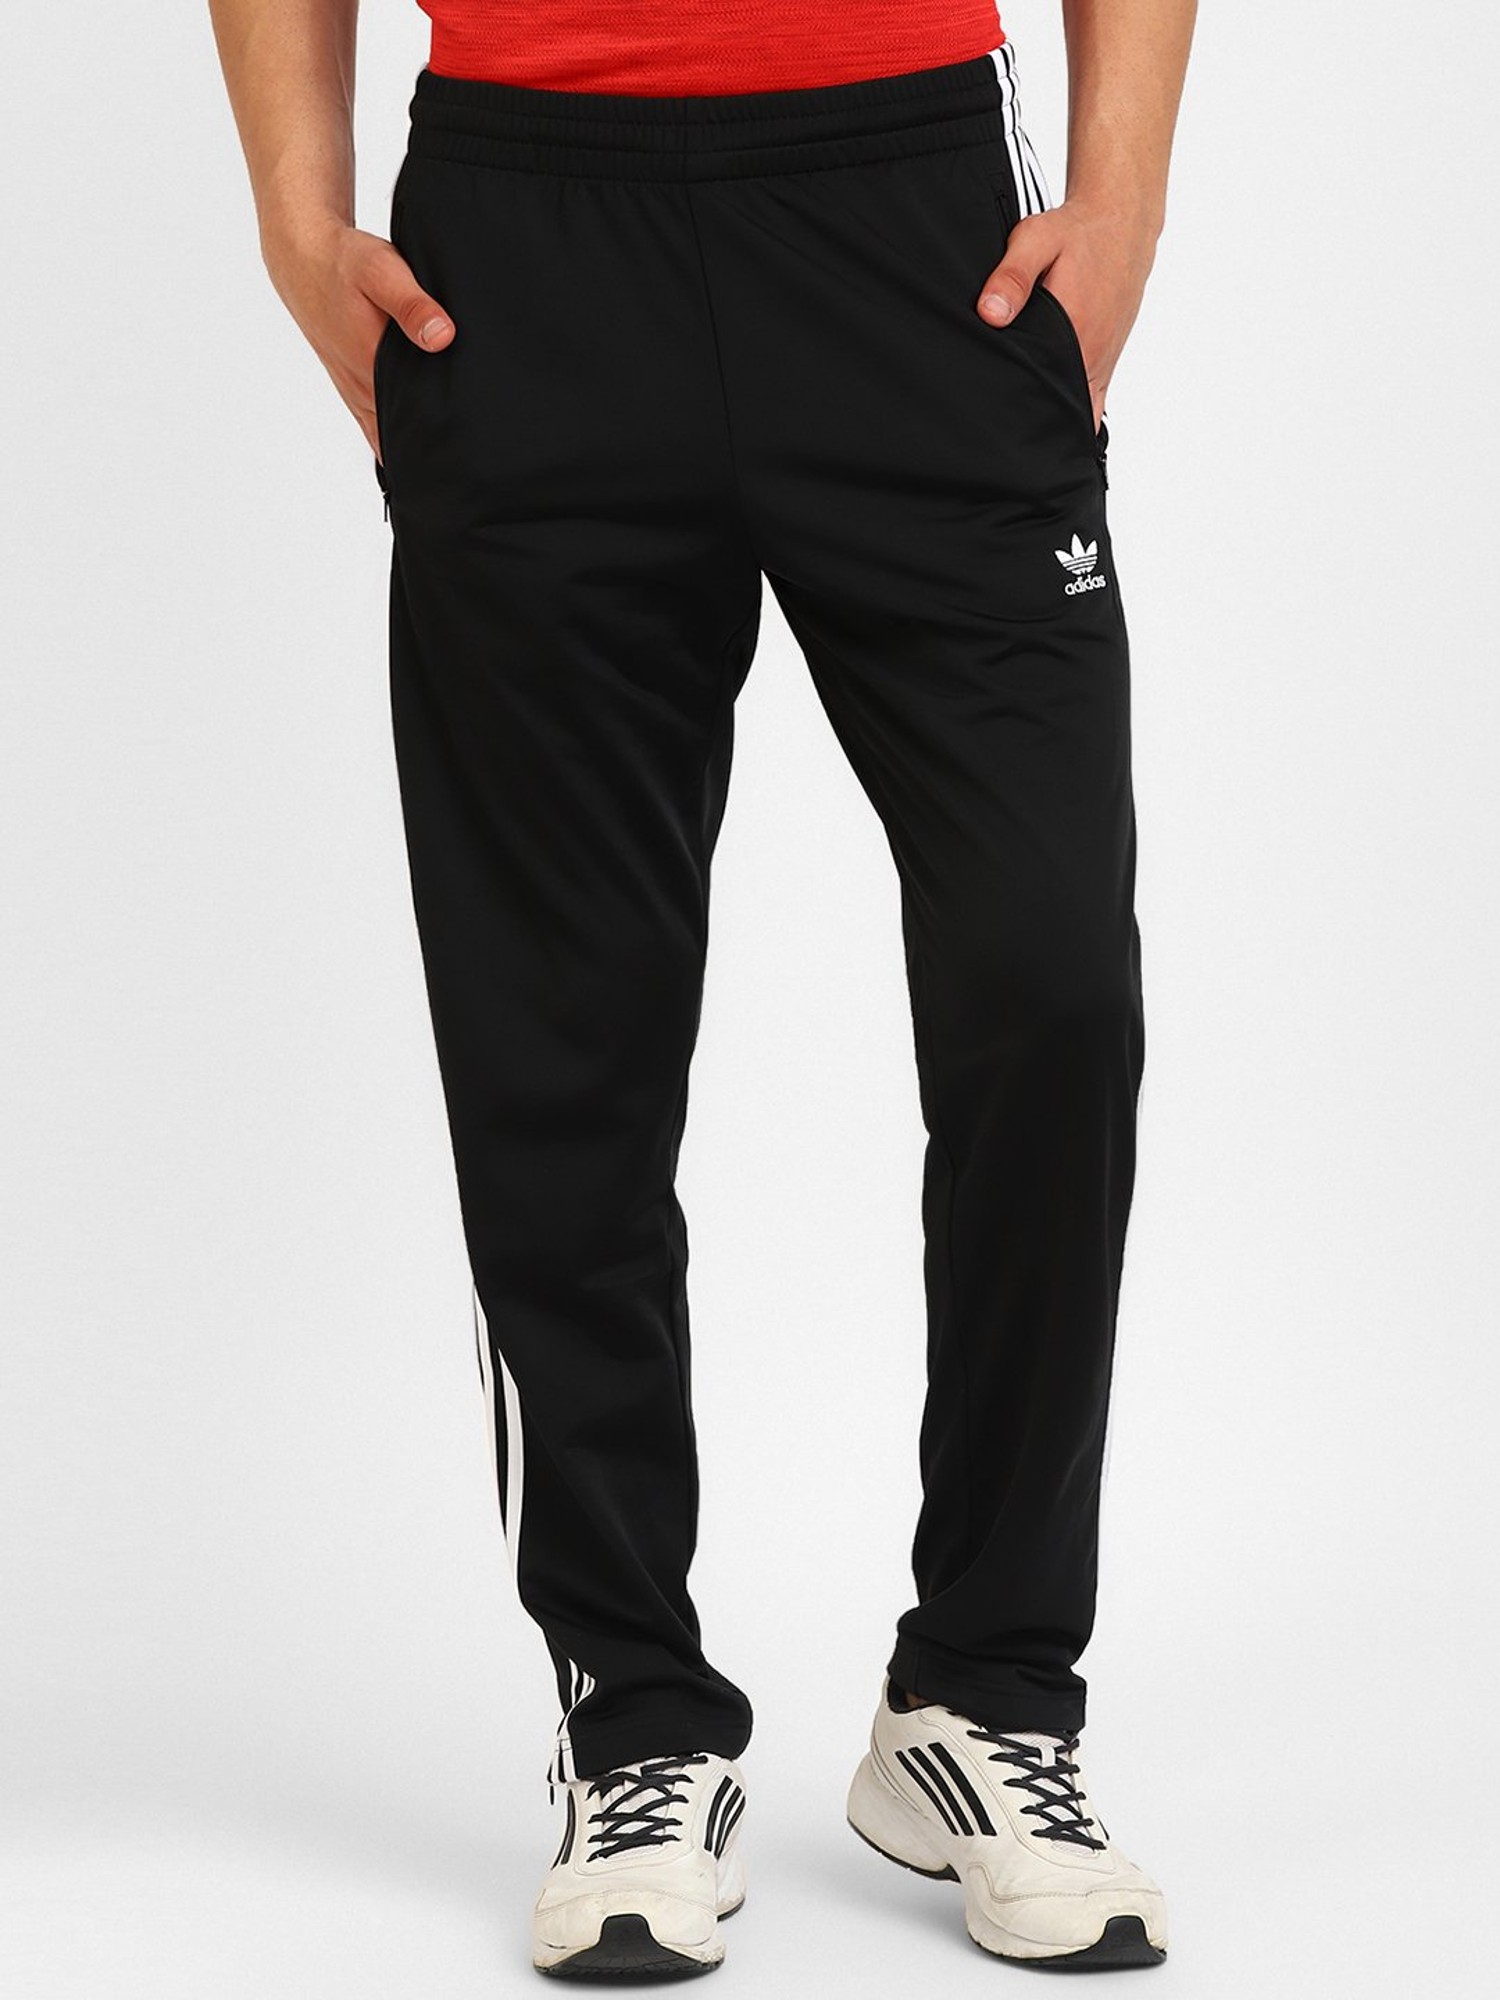 adidas Originals adicolor adibreak side logo track pants in black  ASOS